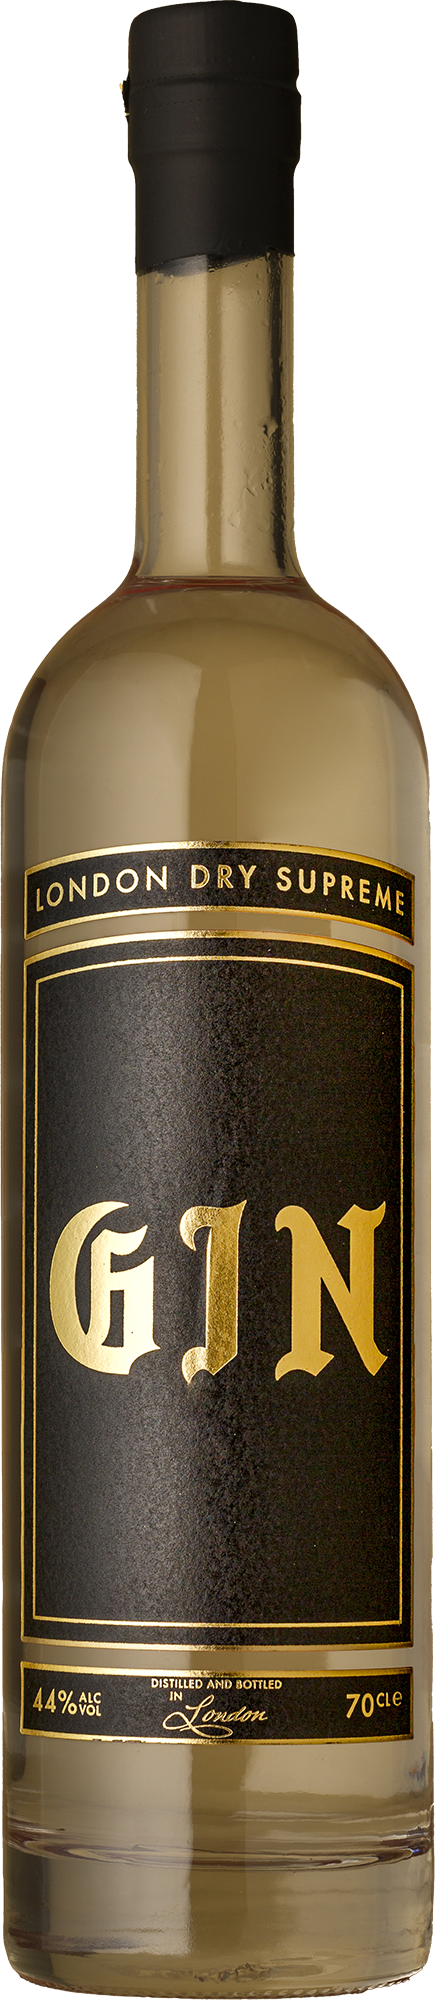 Goldy - London Dry Supreme Gin 700mL Not Wine